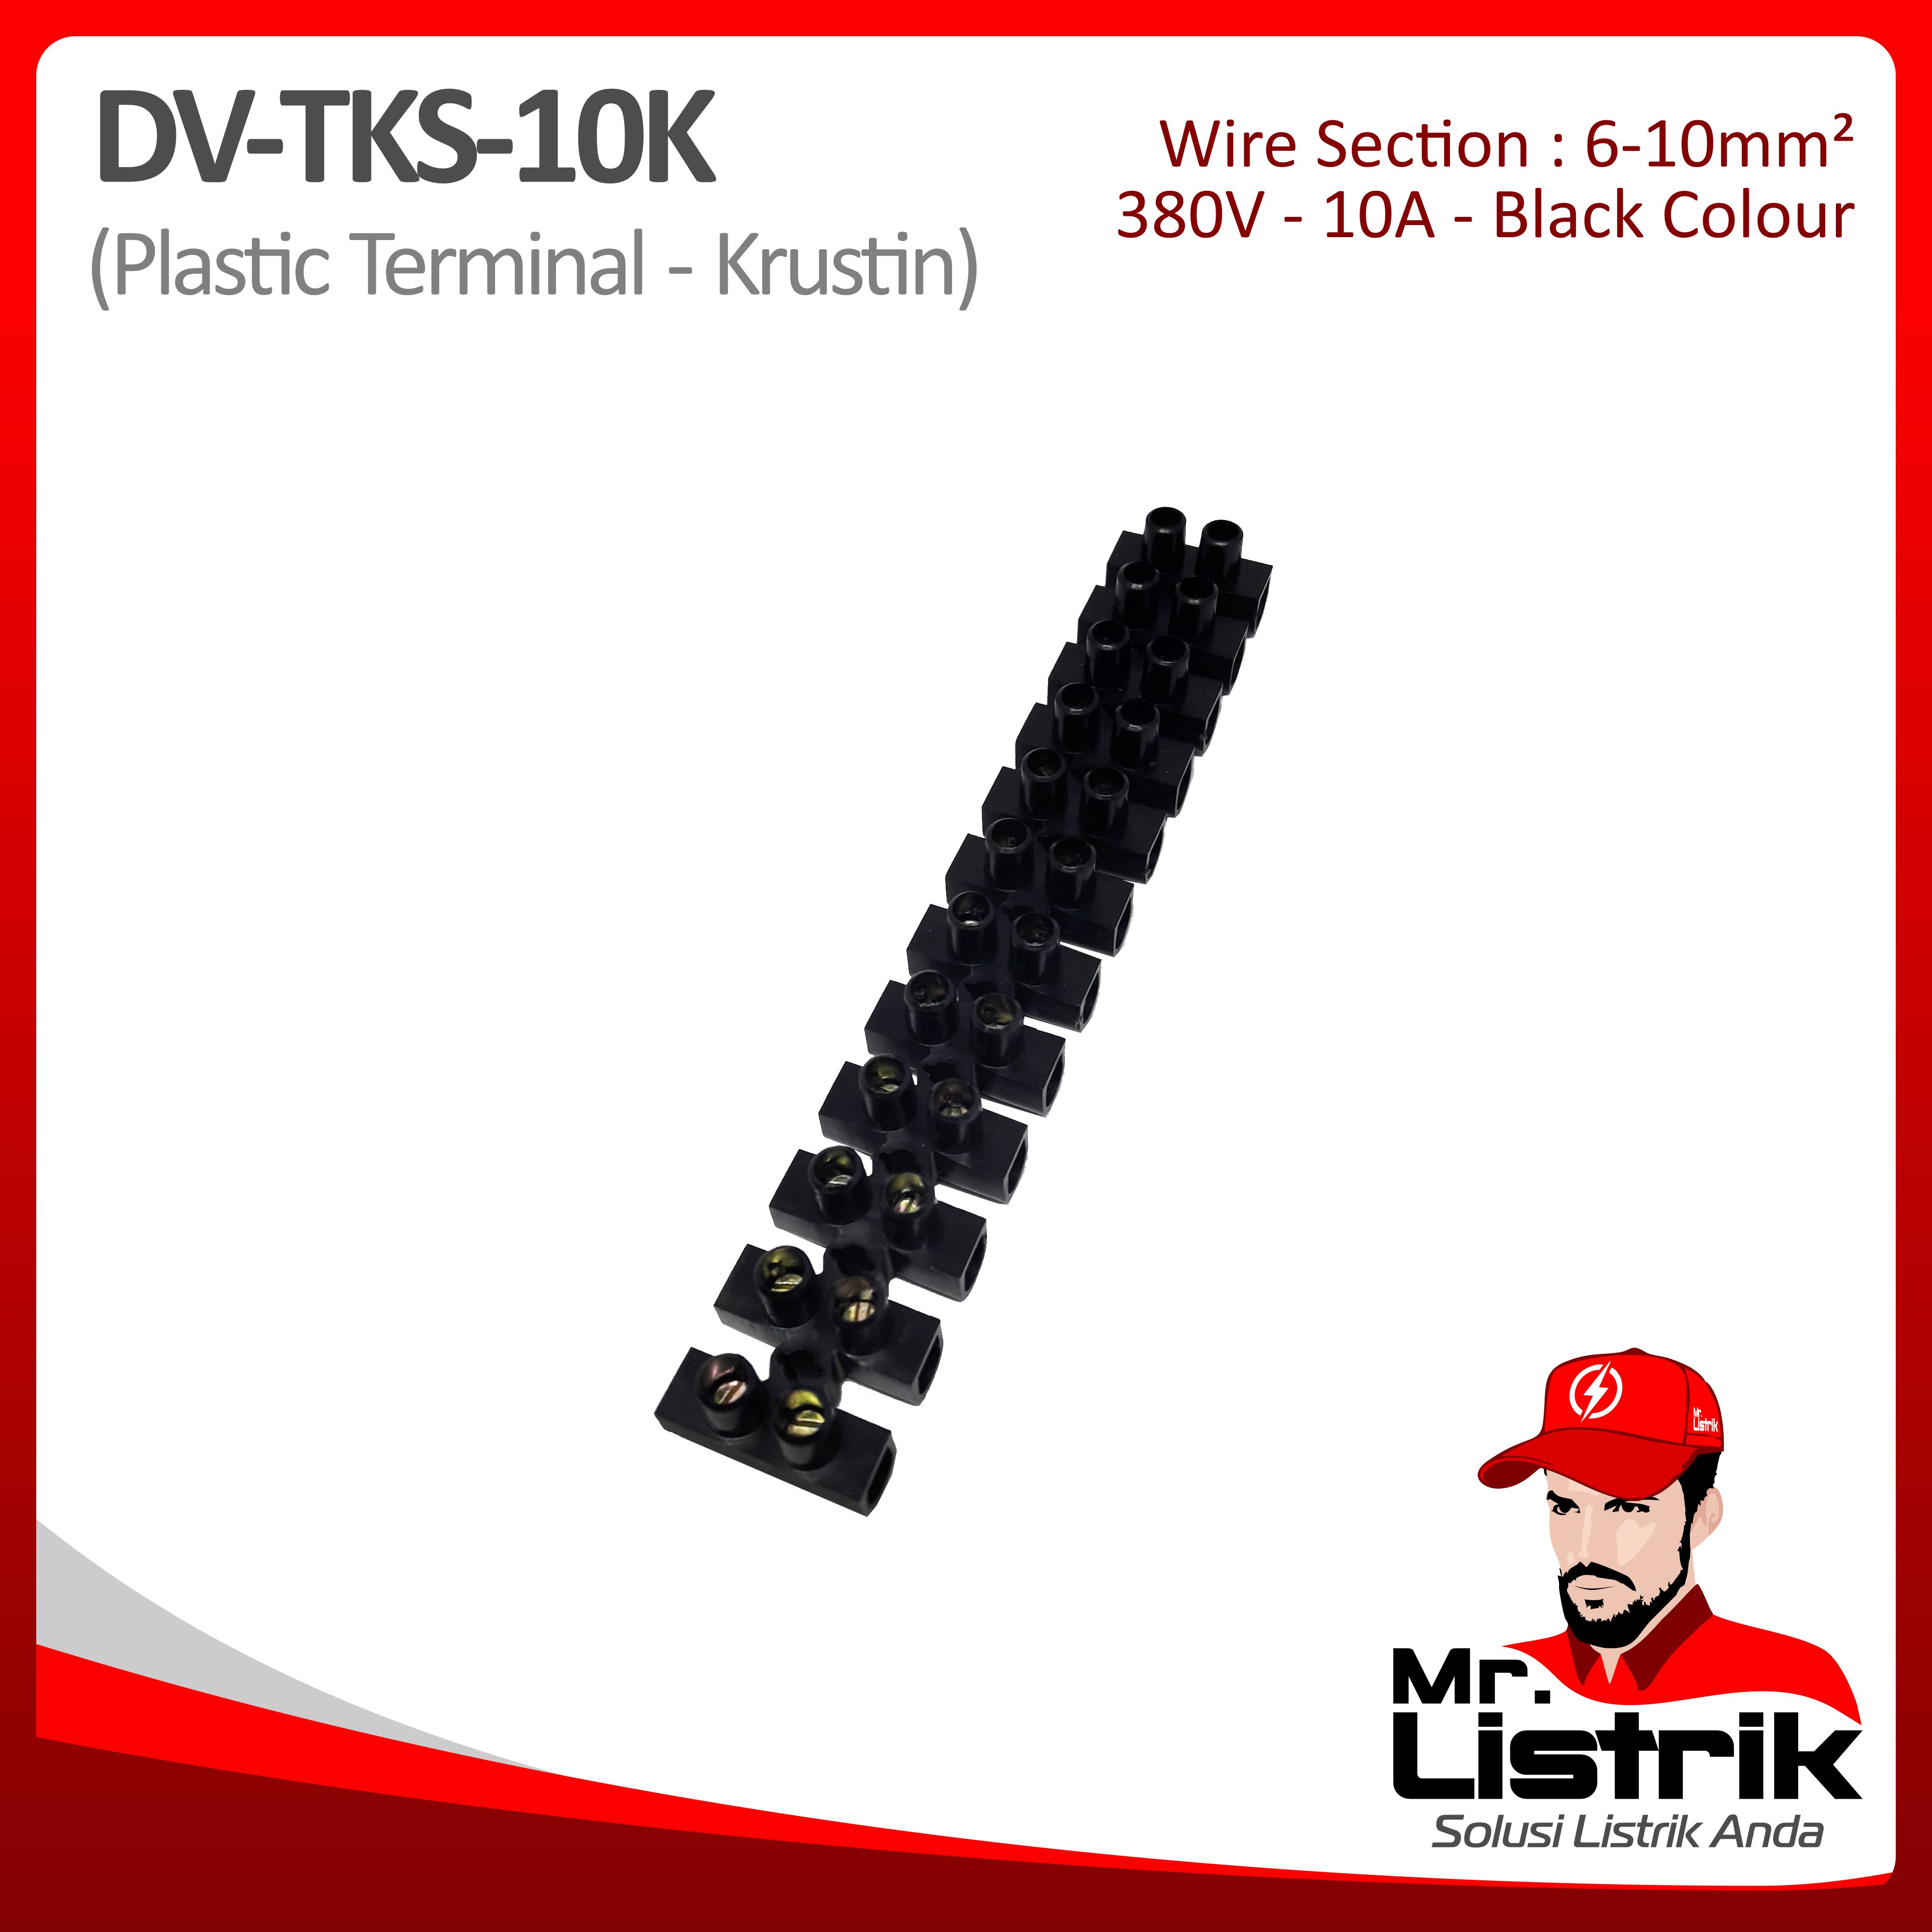 Terminal Block Krustin 6-10mm DV TKS-10K